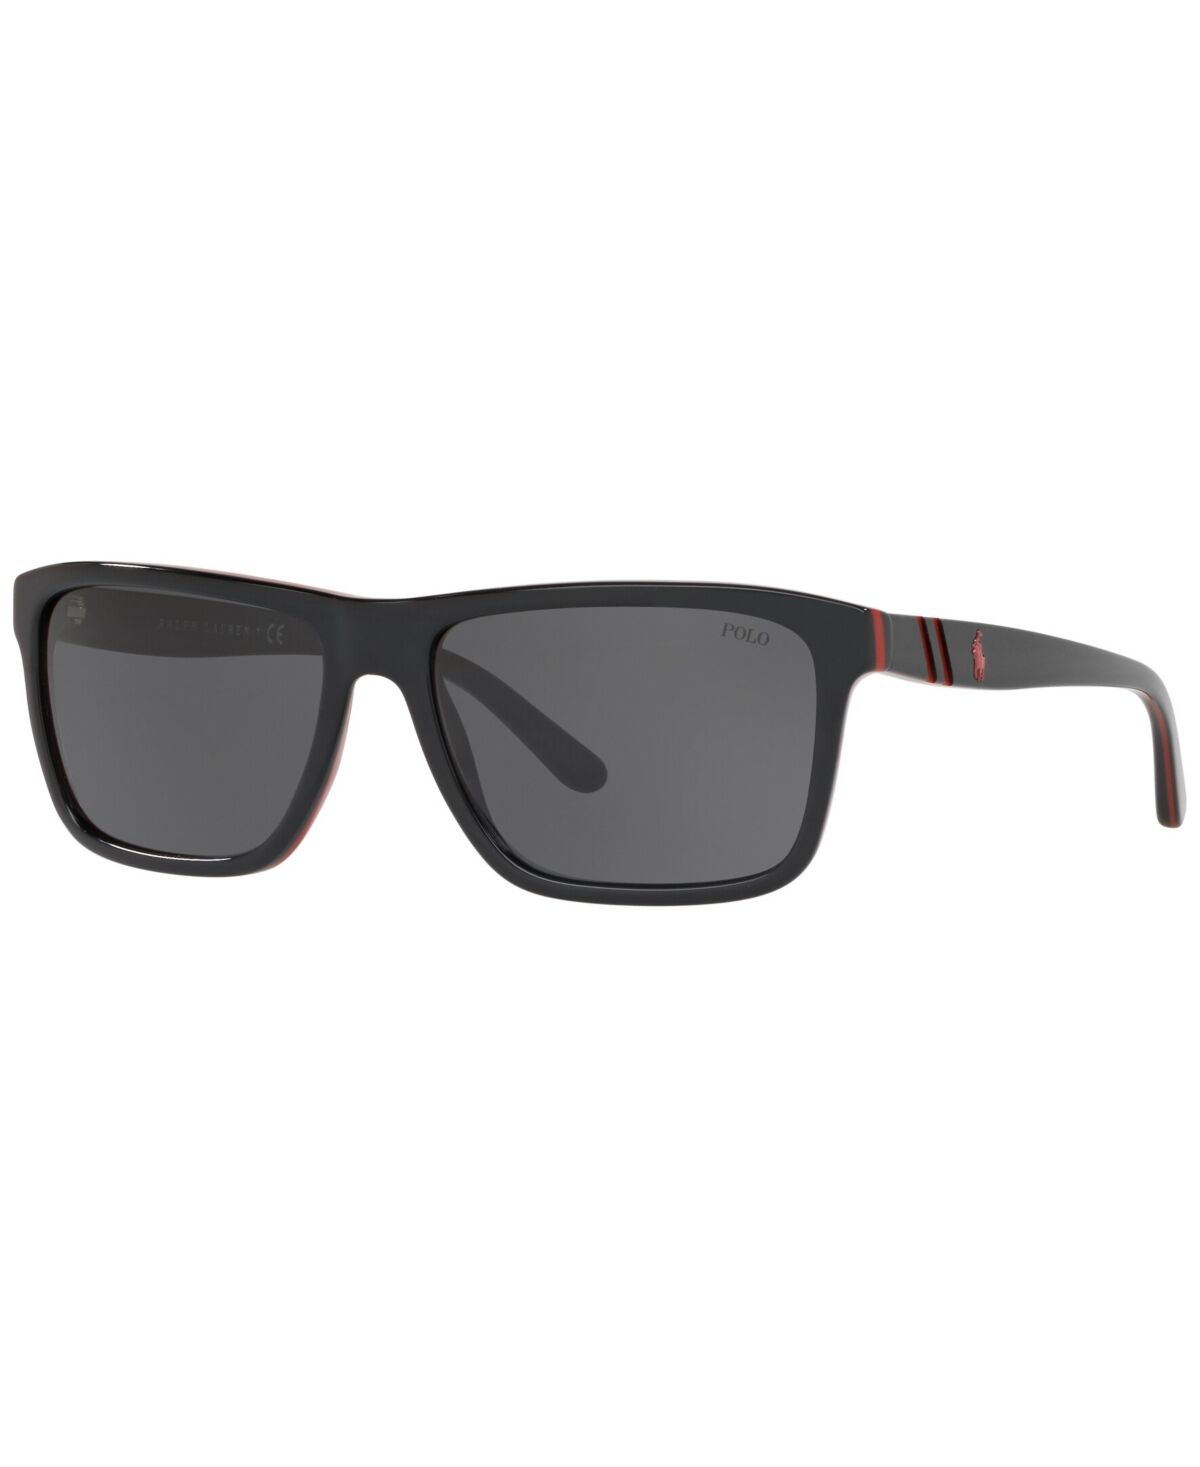 Ralph Lauren Polo Ralph Lauren Men's Sunglasses, PH4153 - Black